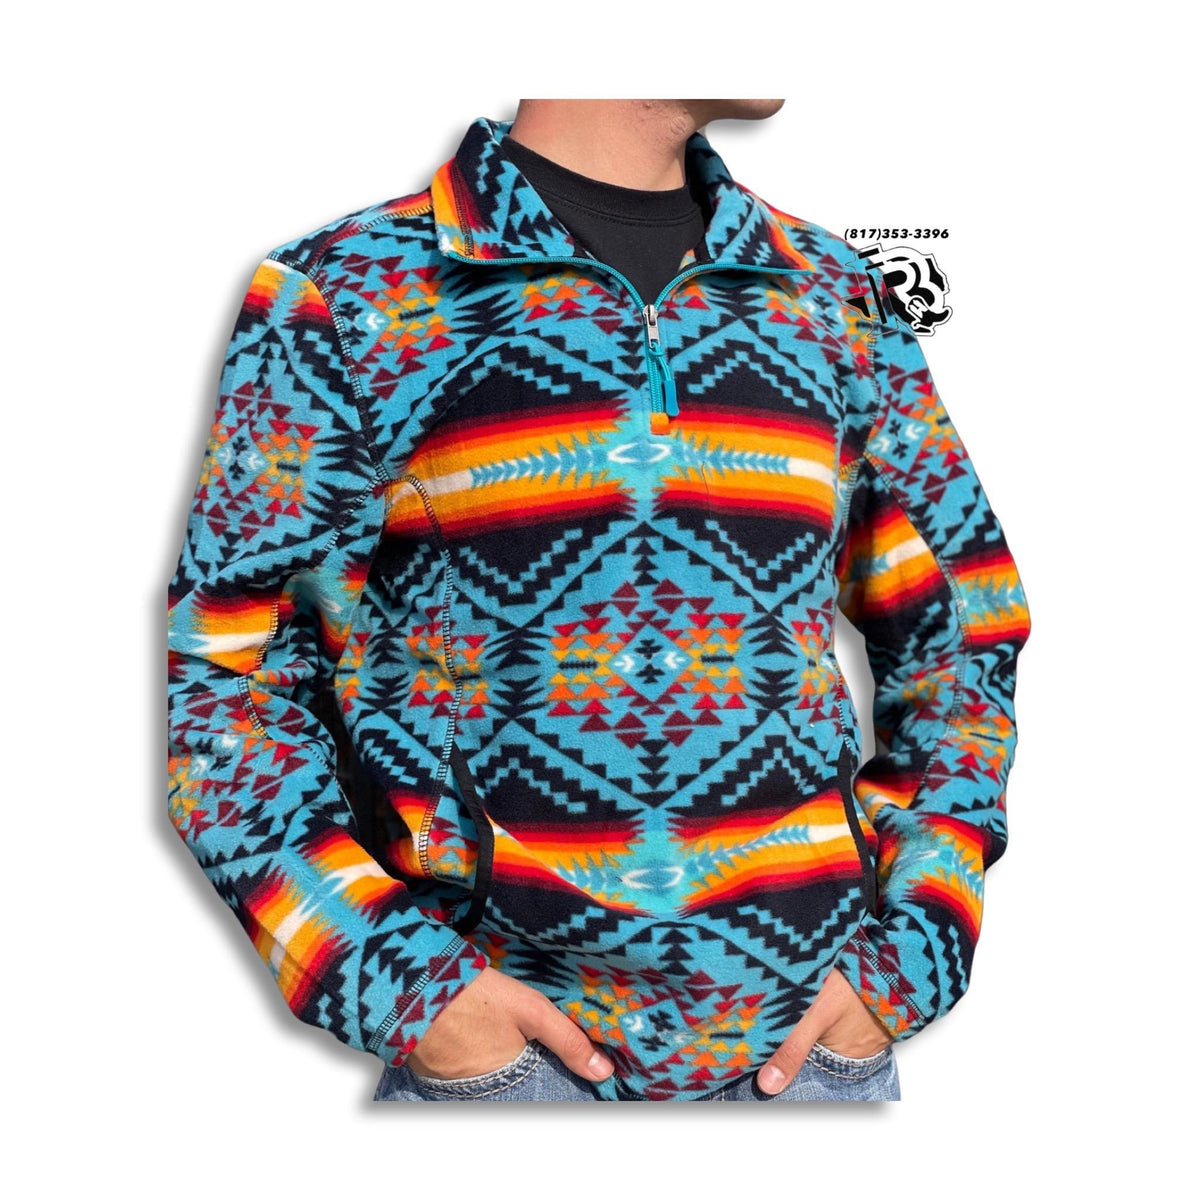 Teal Aztec Fleece Pullover Hoodie – Western Edge, Ltd.